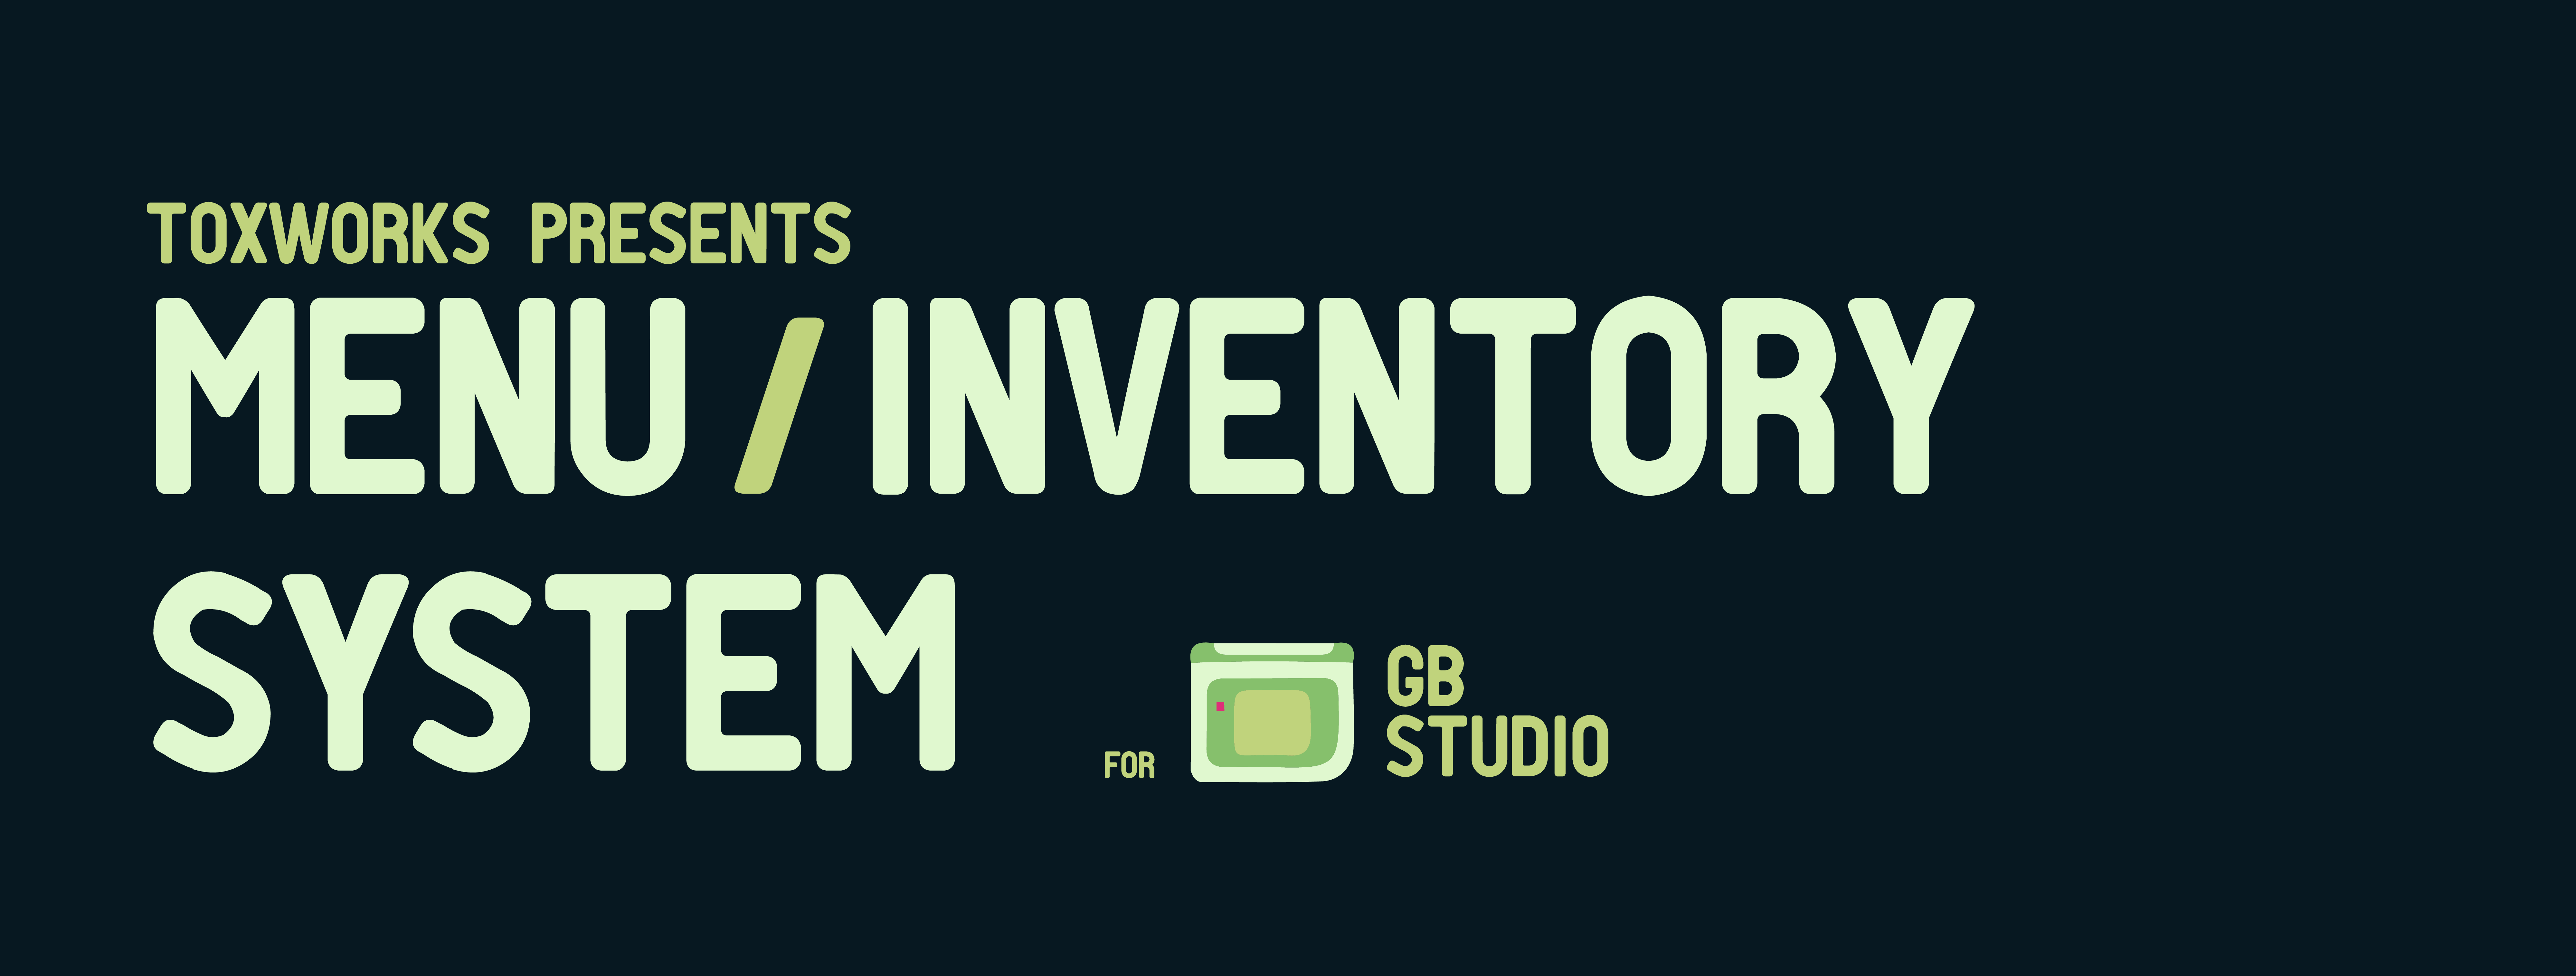 Menu/Inventory System for GB Studio